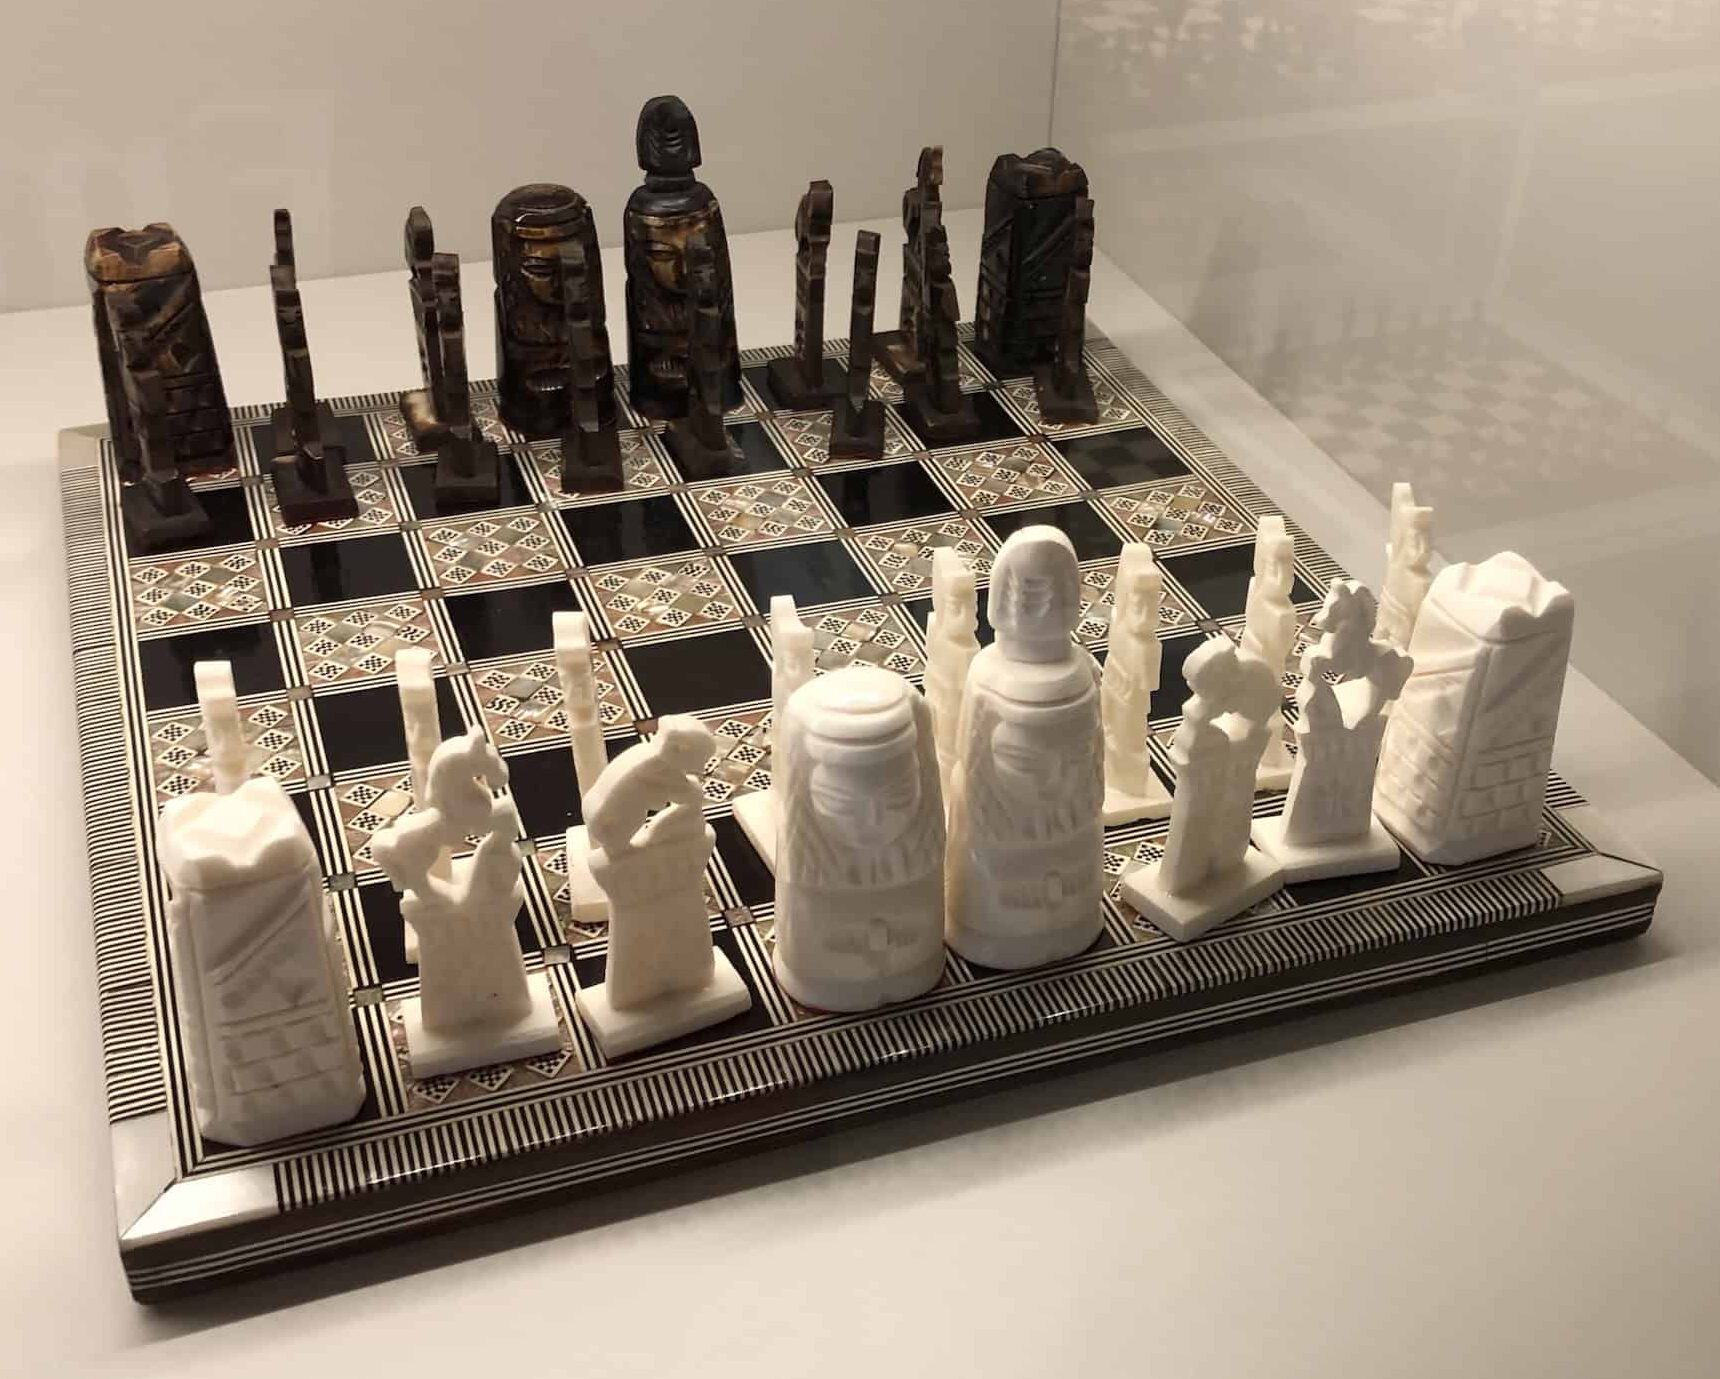 Meerschaum chess set (Iran) at the Gökyay Foundation Chess Museum in Ankara, Turkey